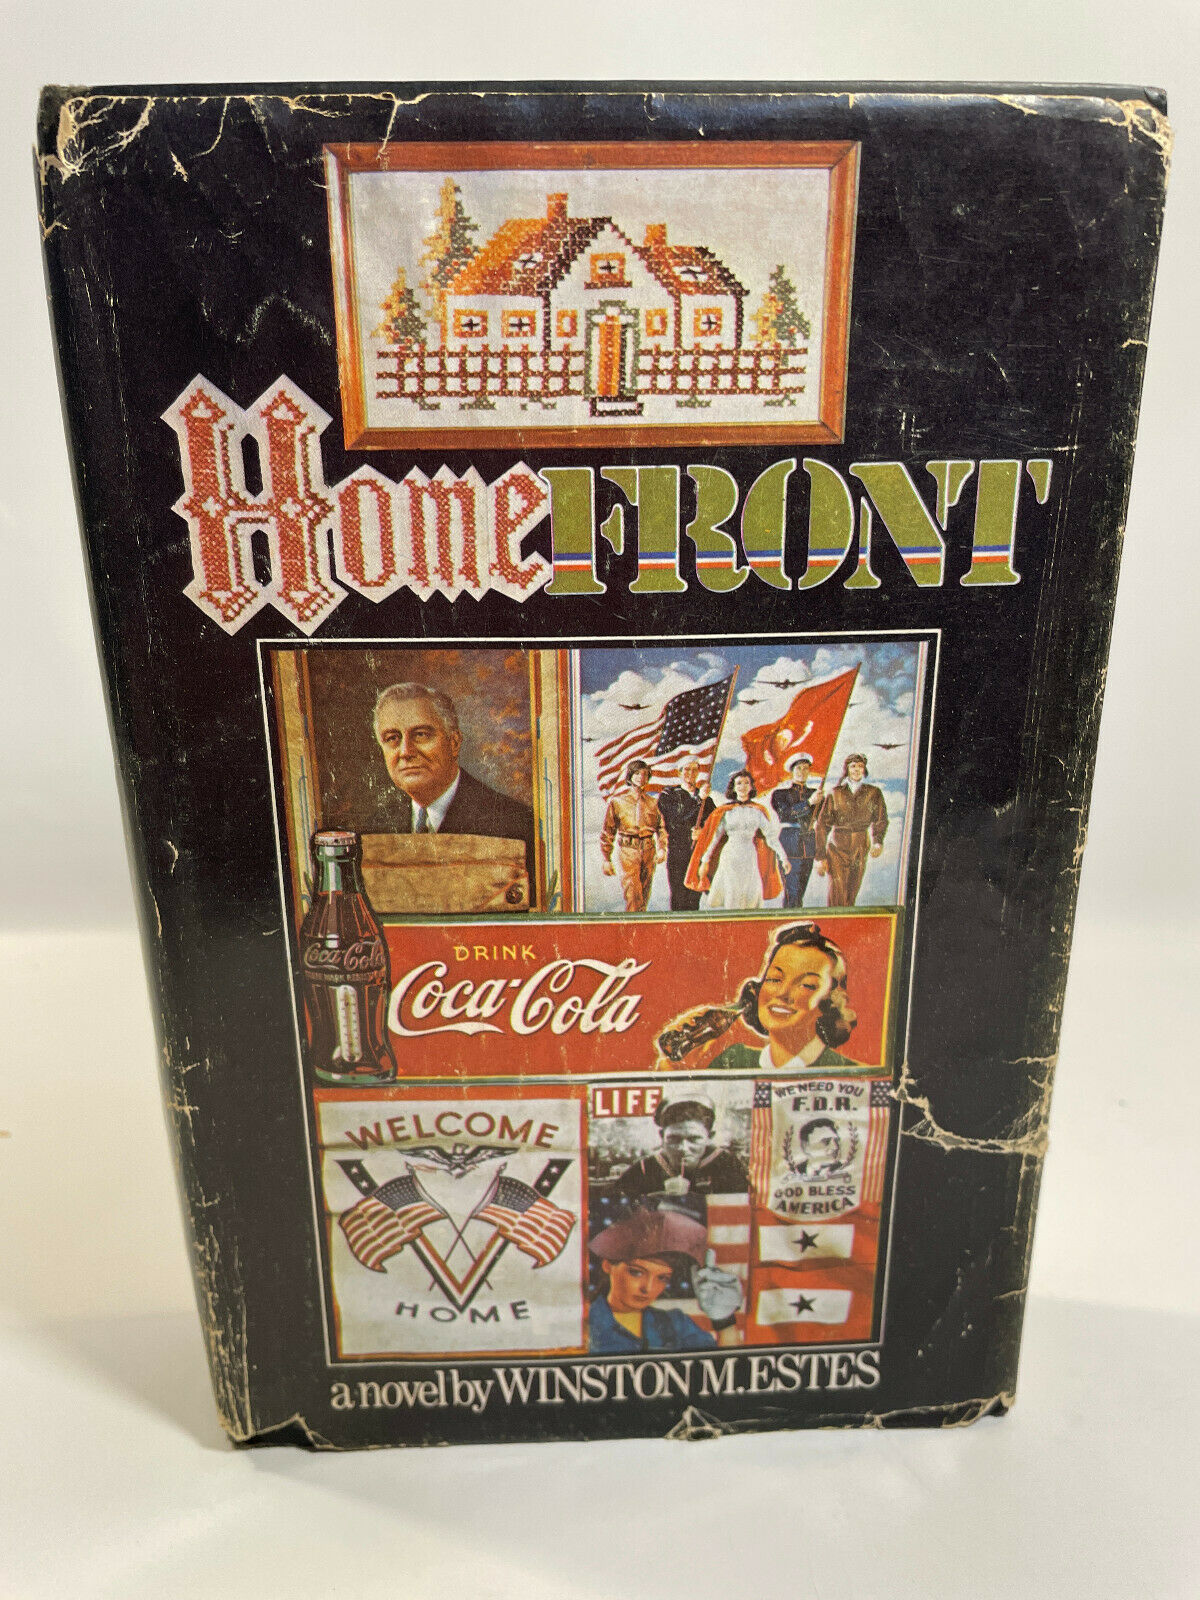 Homefront: A Novel by Winston M. Estes